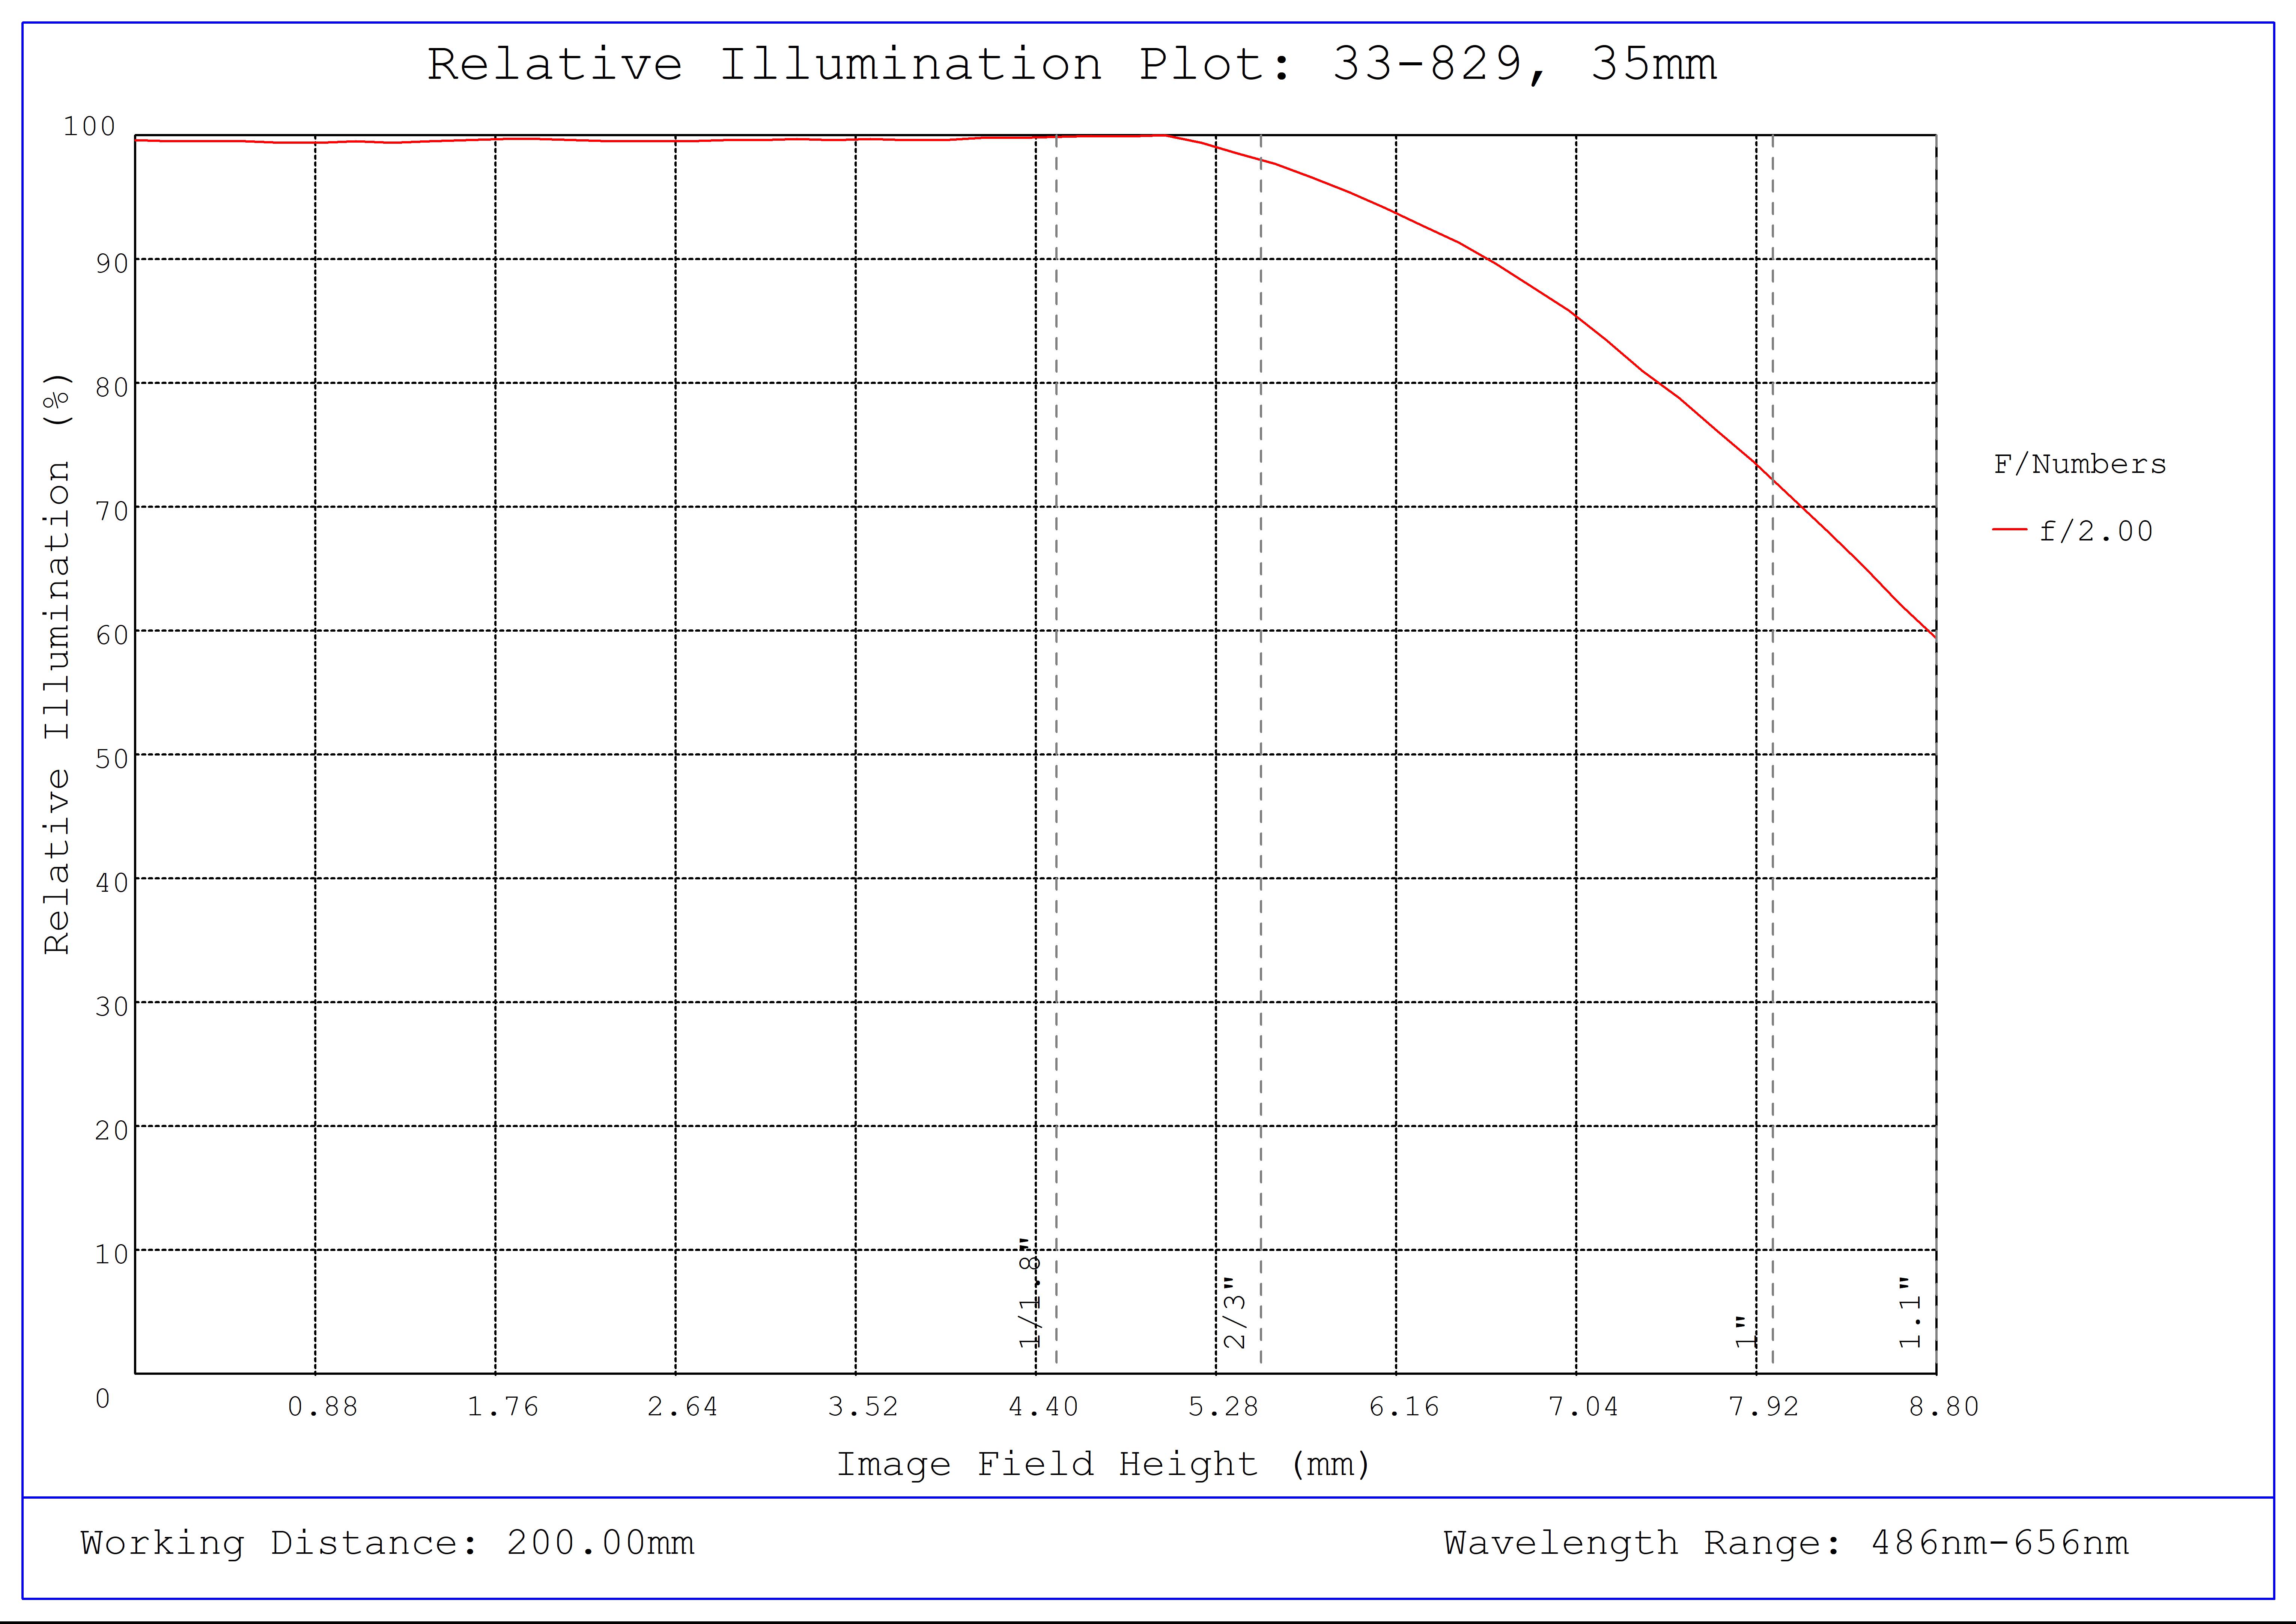 #33-829, 35mm f/2.0, HPi Series Fixed Focal Length Lens, Relative Illumination Plot